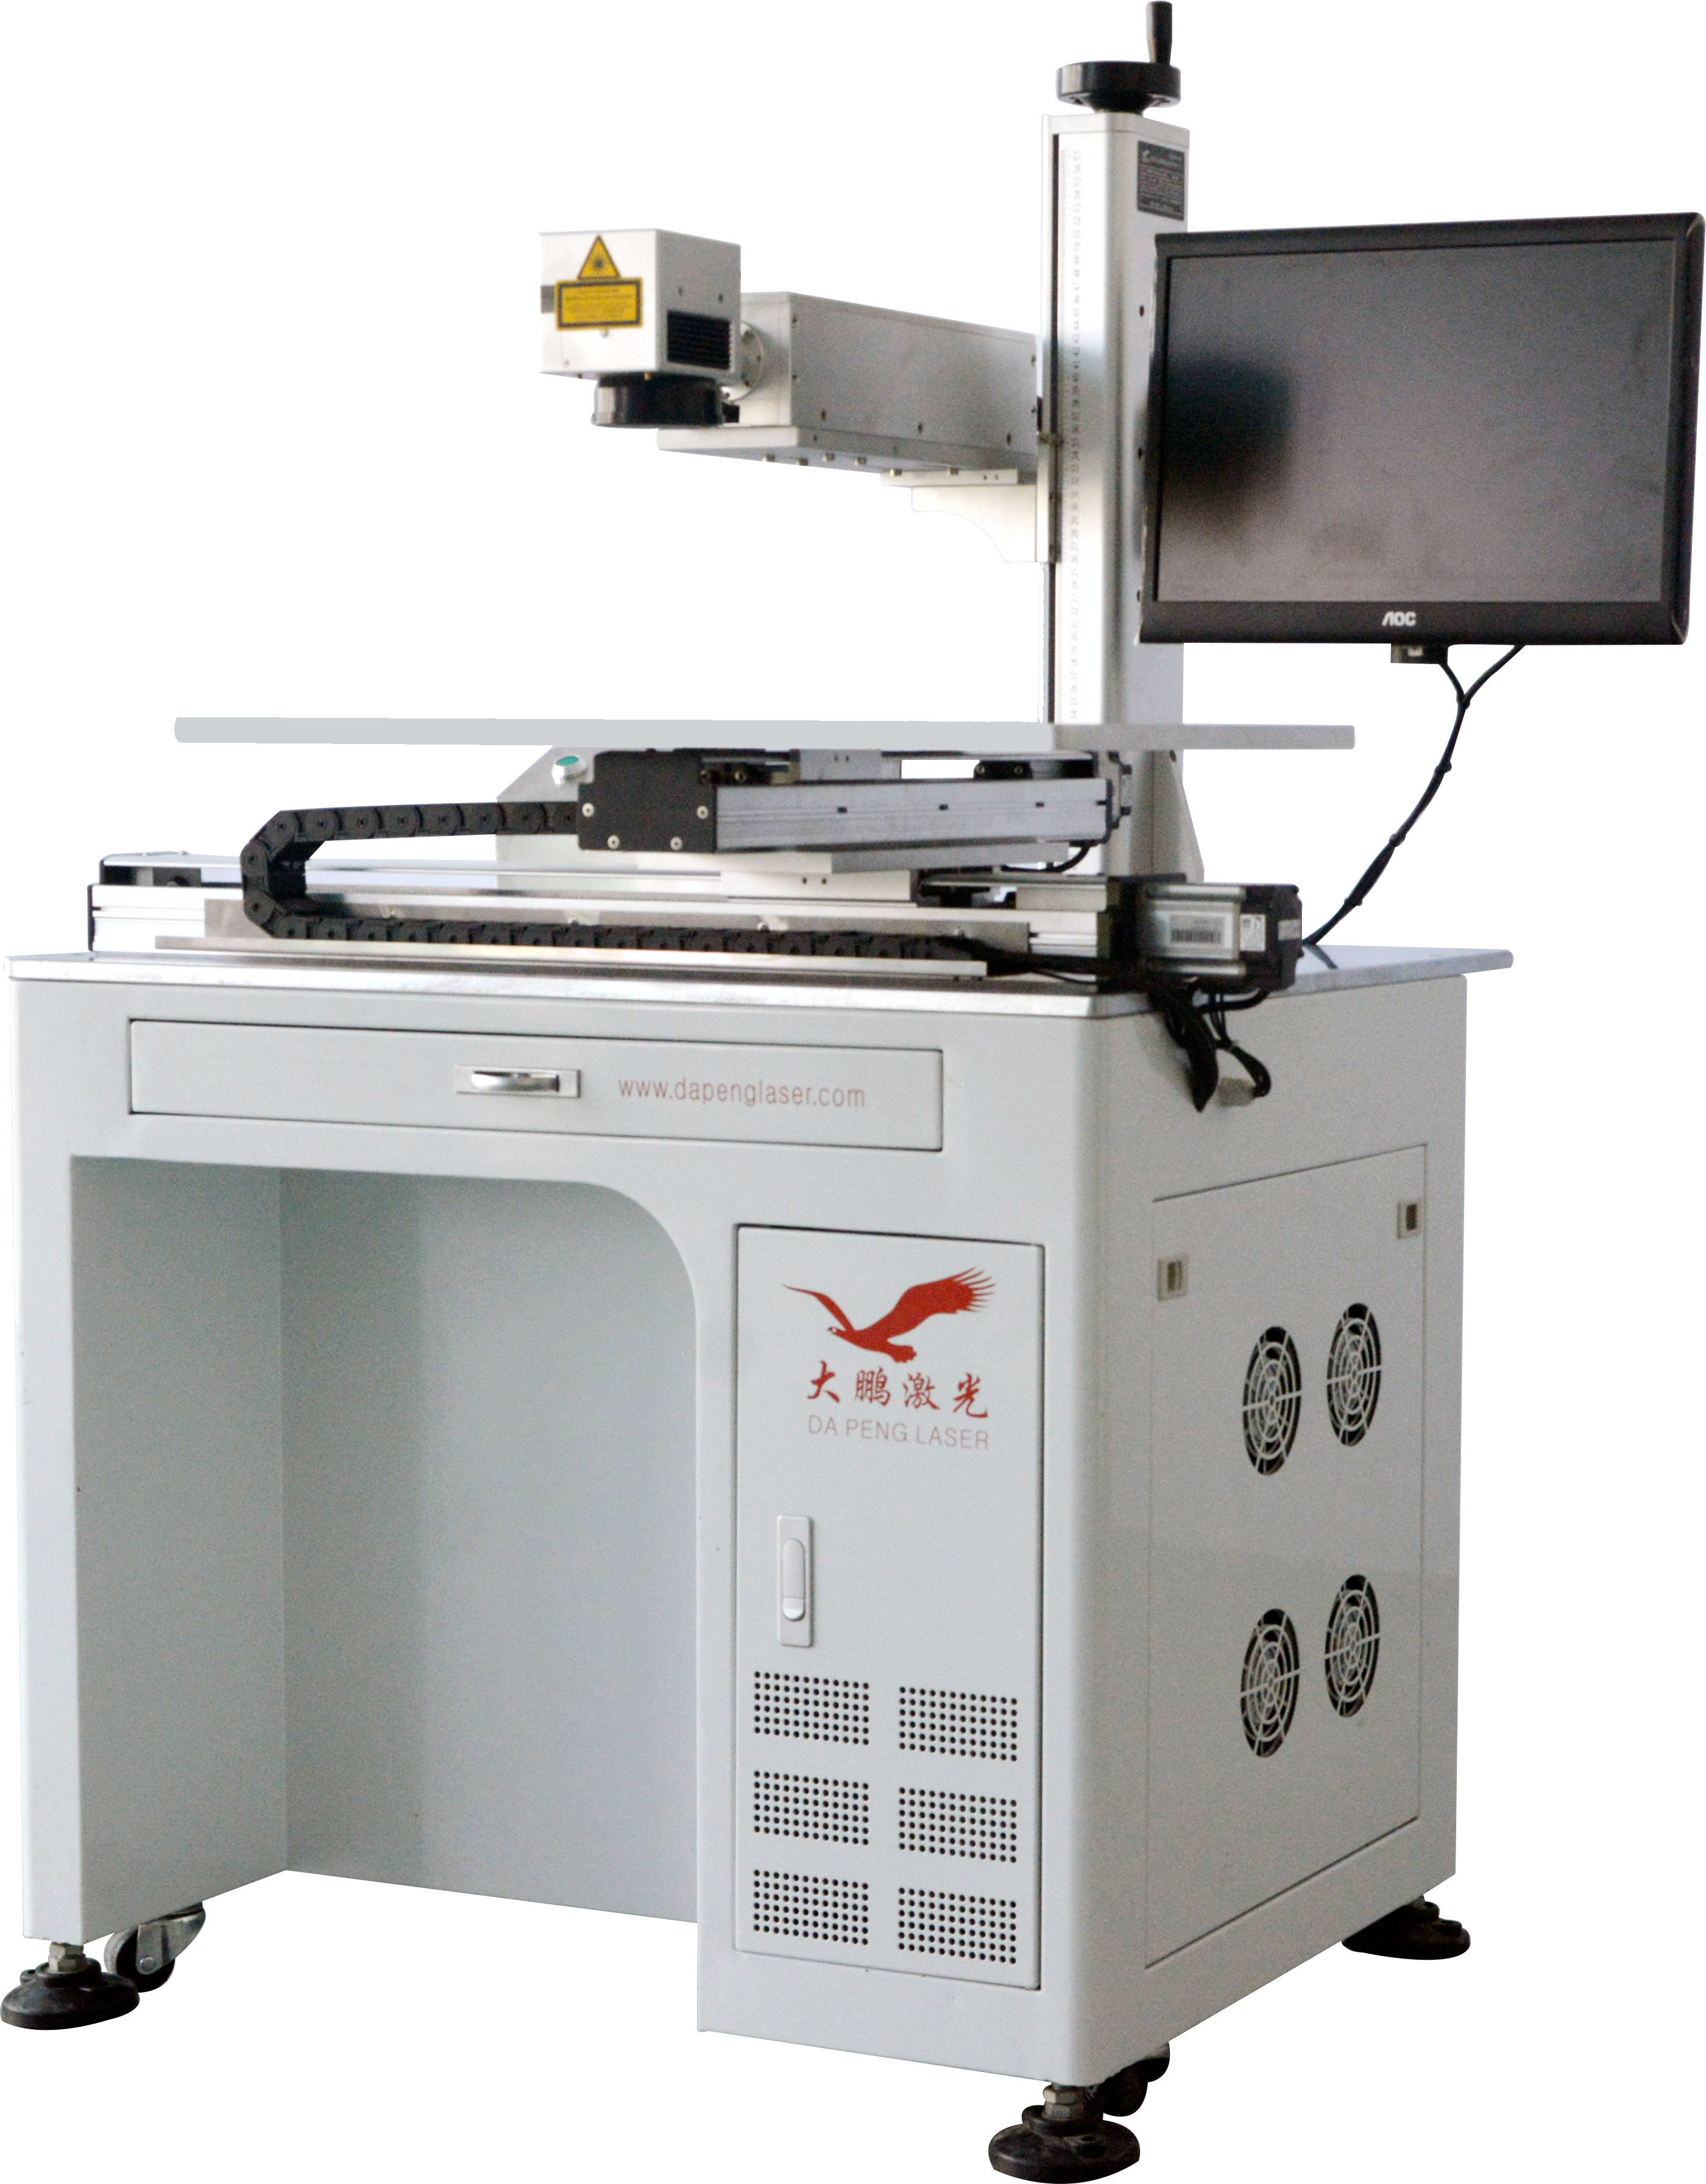 Cross slide laser marking machine